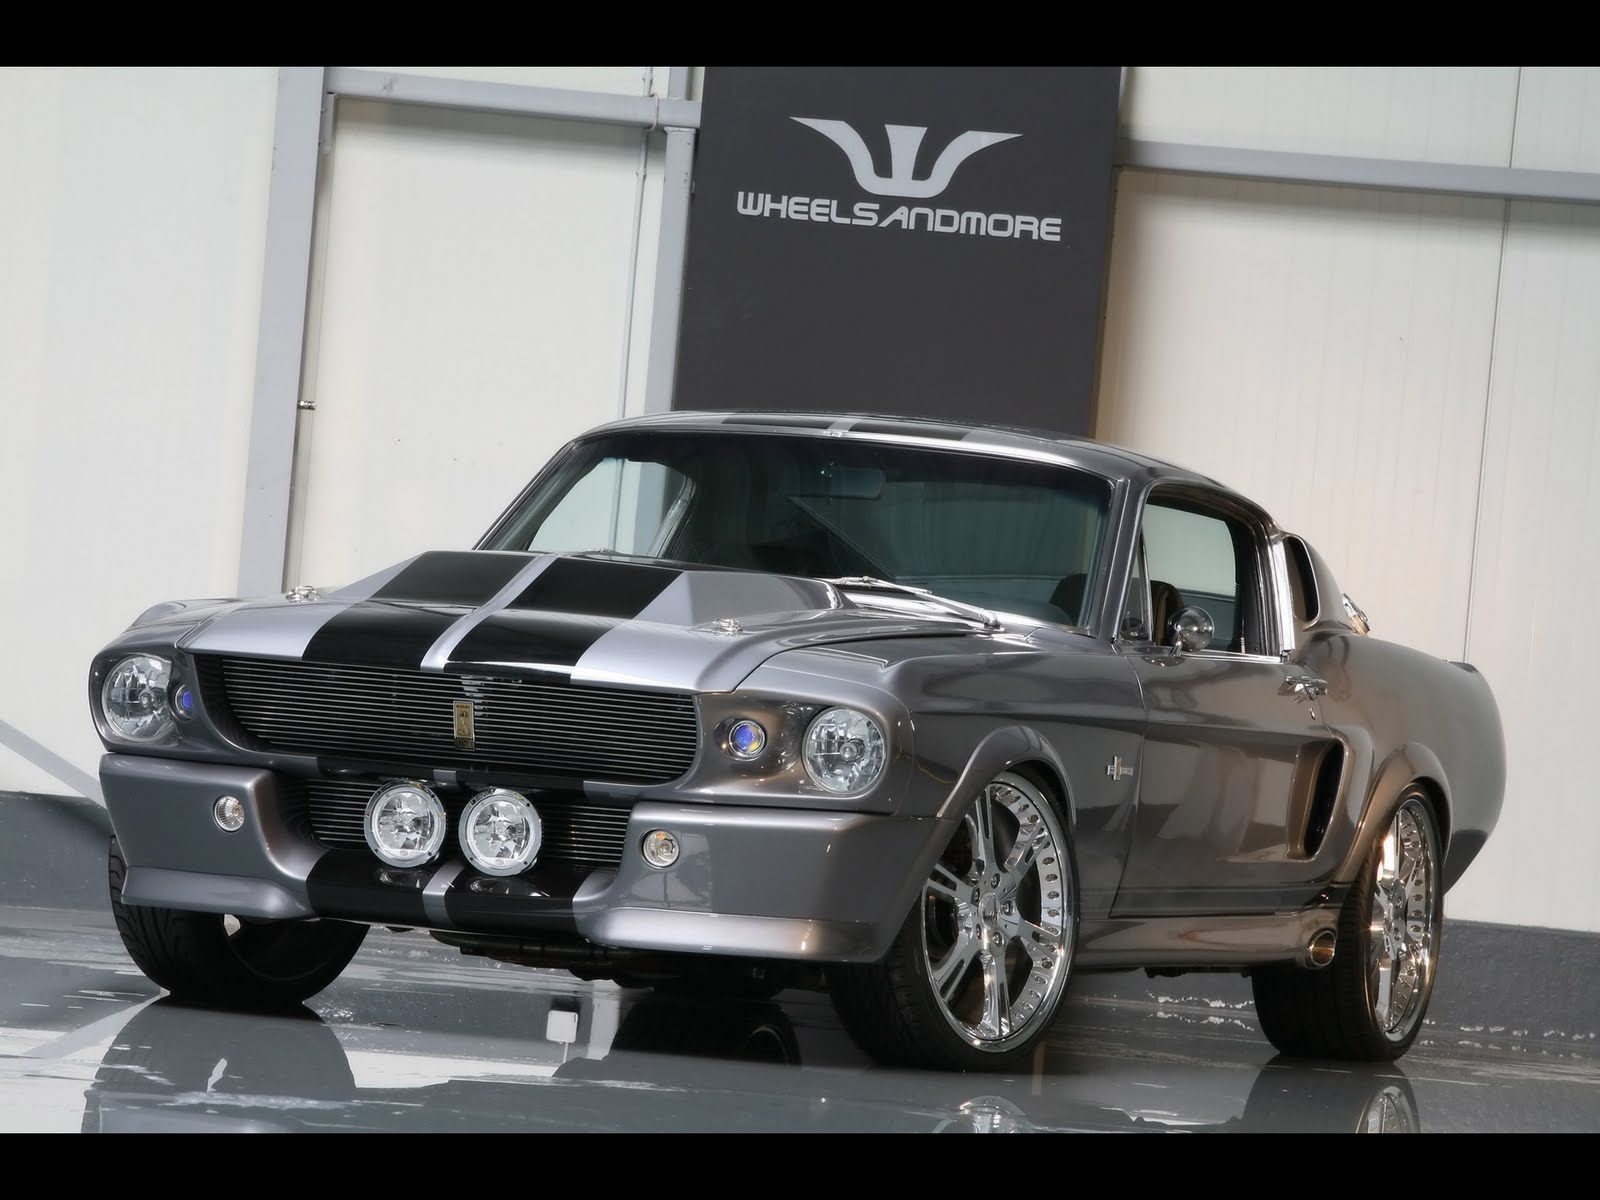 http://4.bp.blogspot.com/-Y2XPpC4GAqE/ThD7MW8dmzI/AAAAAAAAB44/cVTHOHjZduE/s1600/2009-Wheelsandmore-Mustang-Shelby-GT500-Eleanor-Front-Angle-1920x1440.jpg